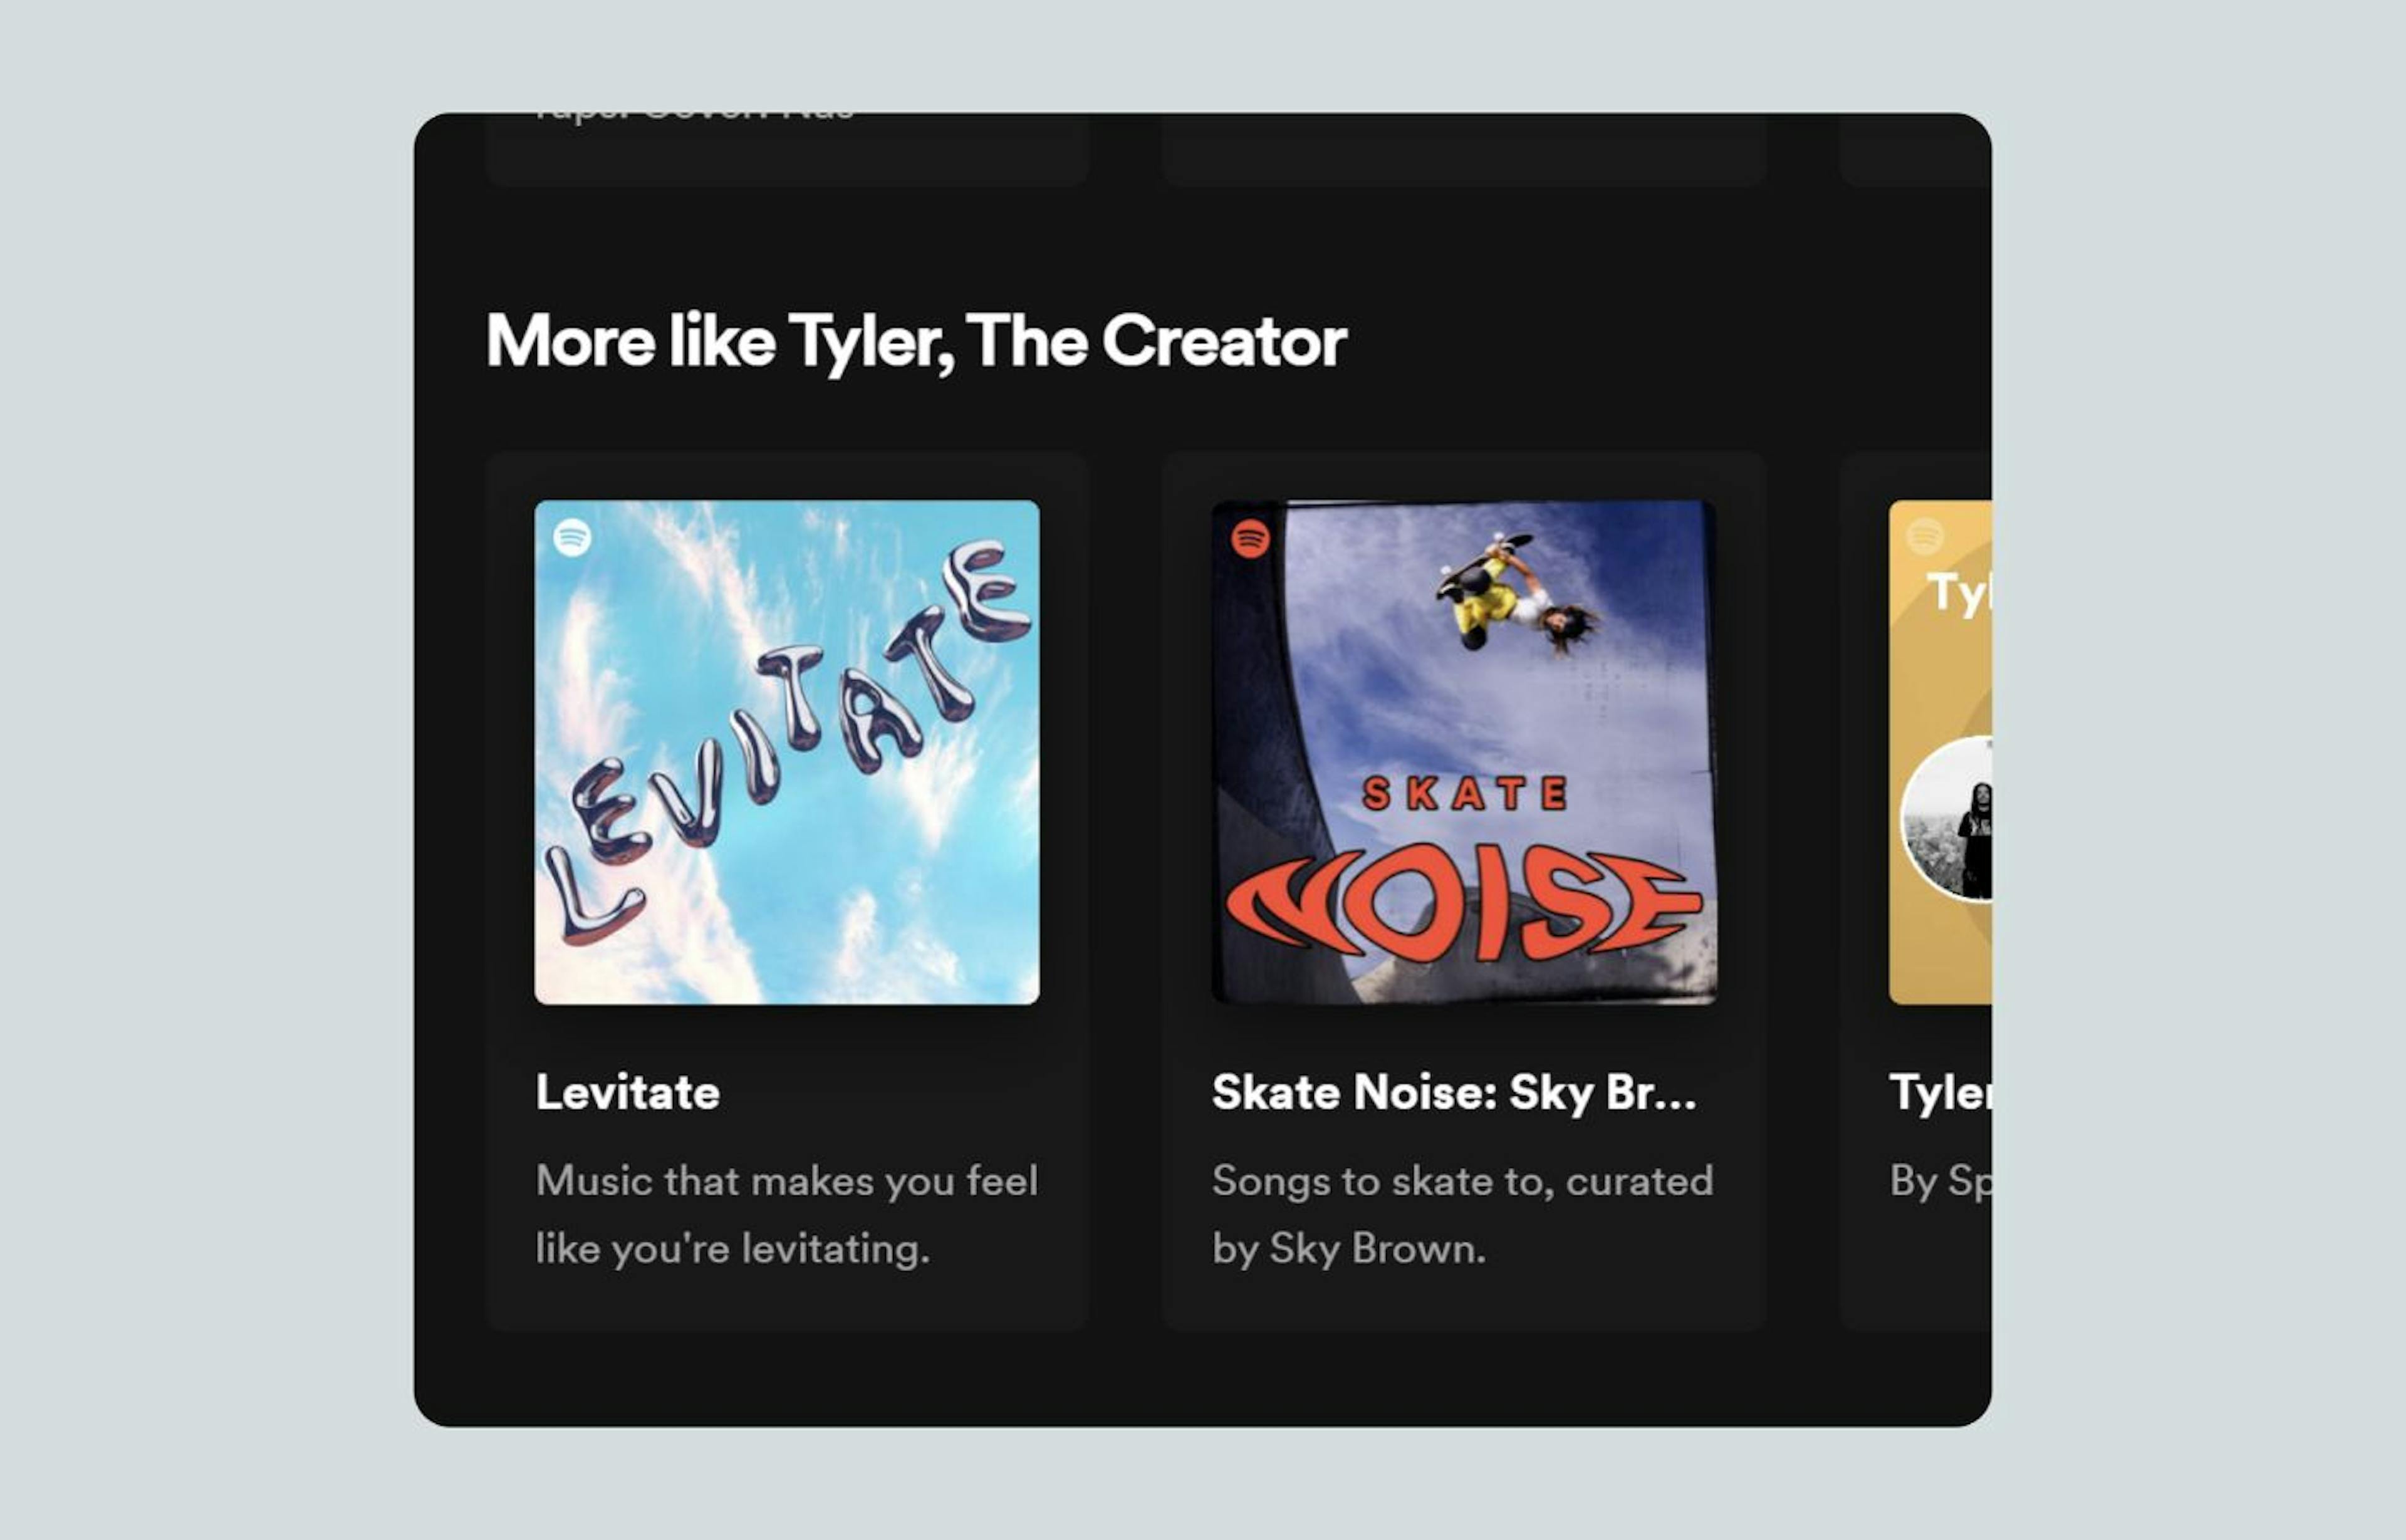 Spotify는 소스 아티스트를 보여주며 이 재생목록을 선택한 이유를 설명합니다.